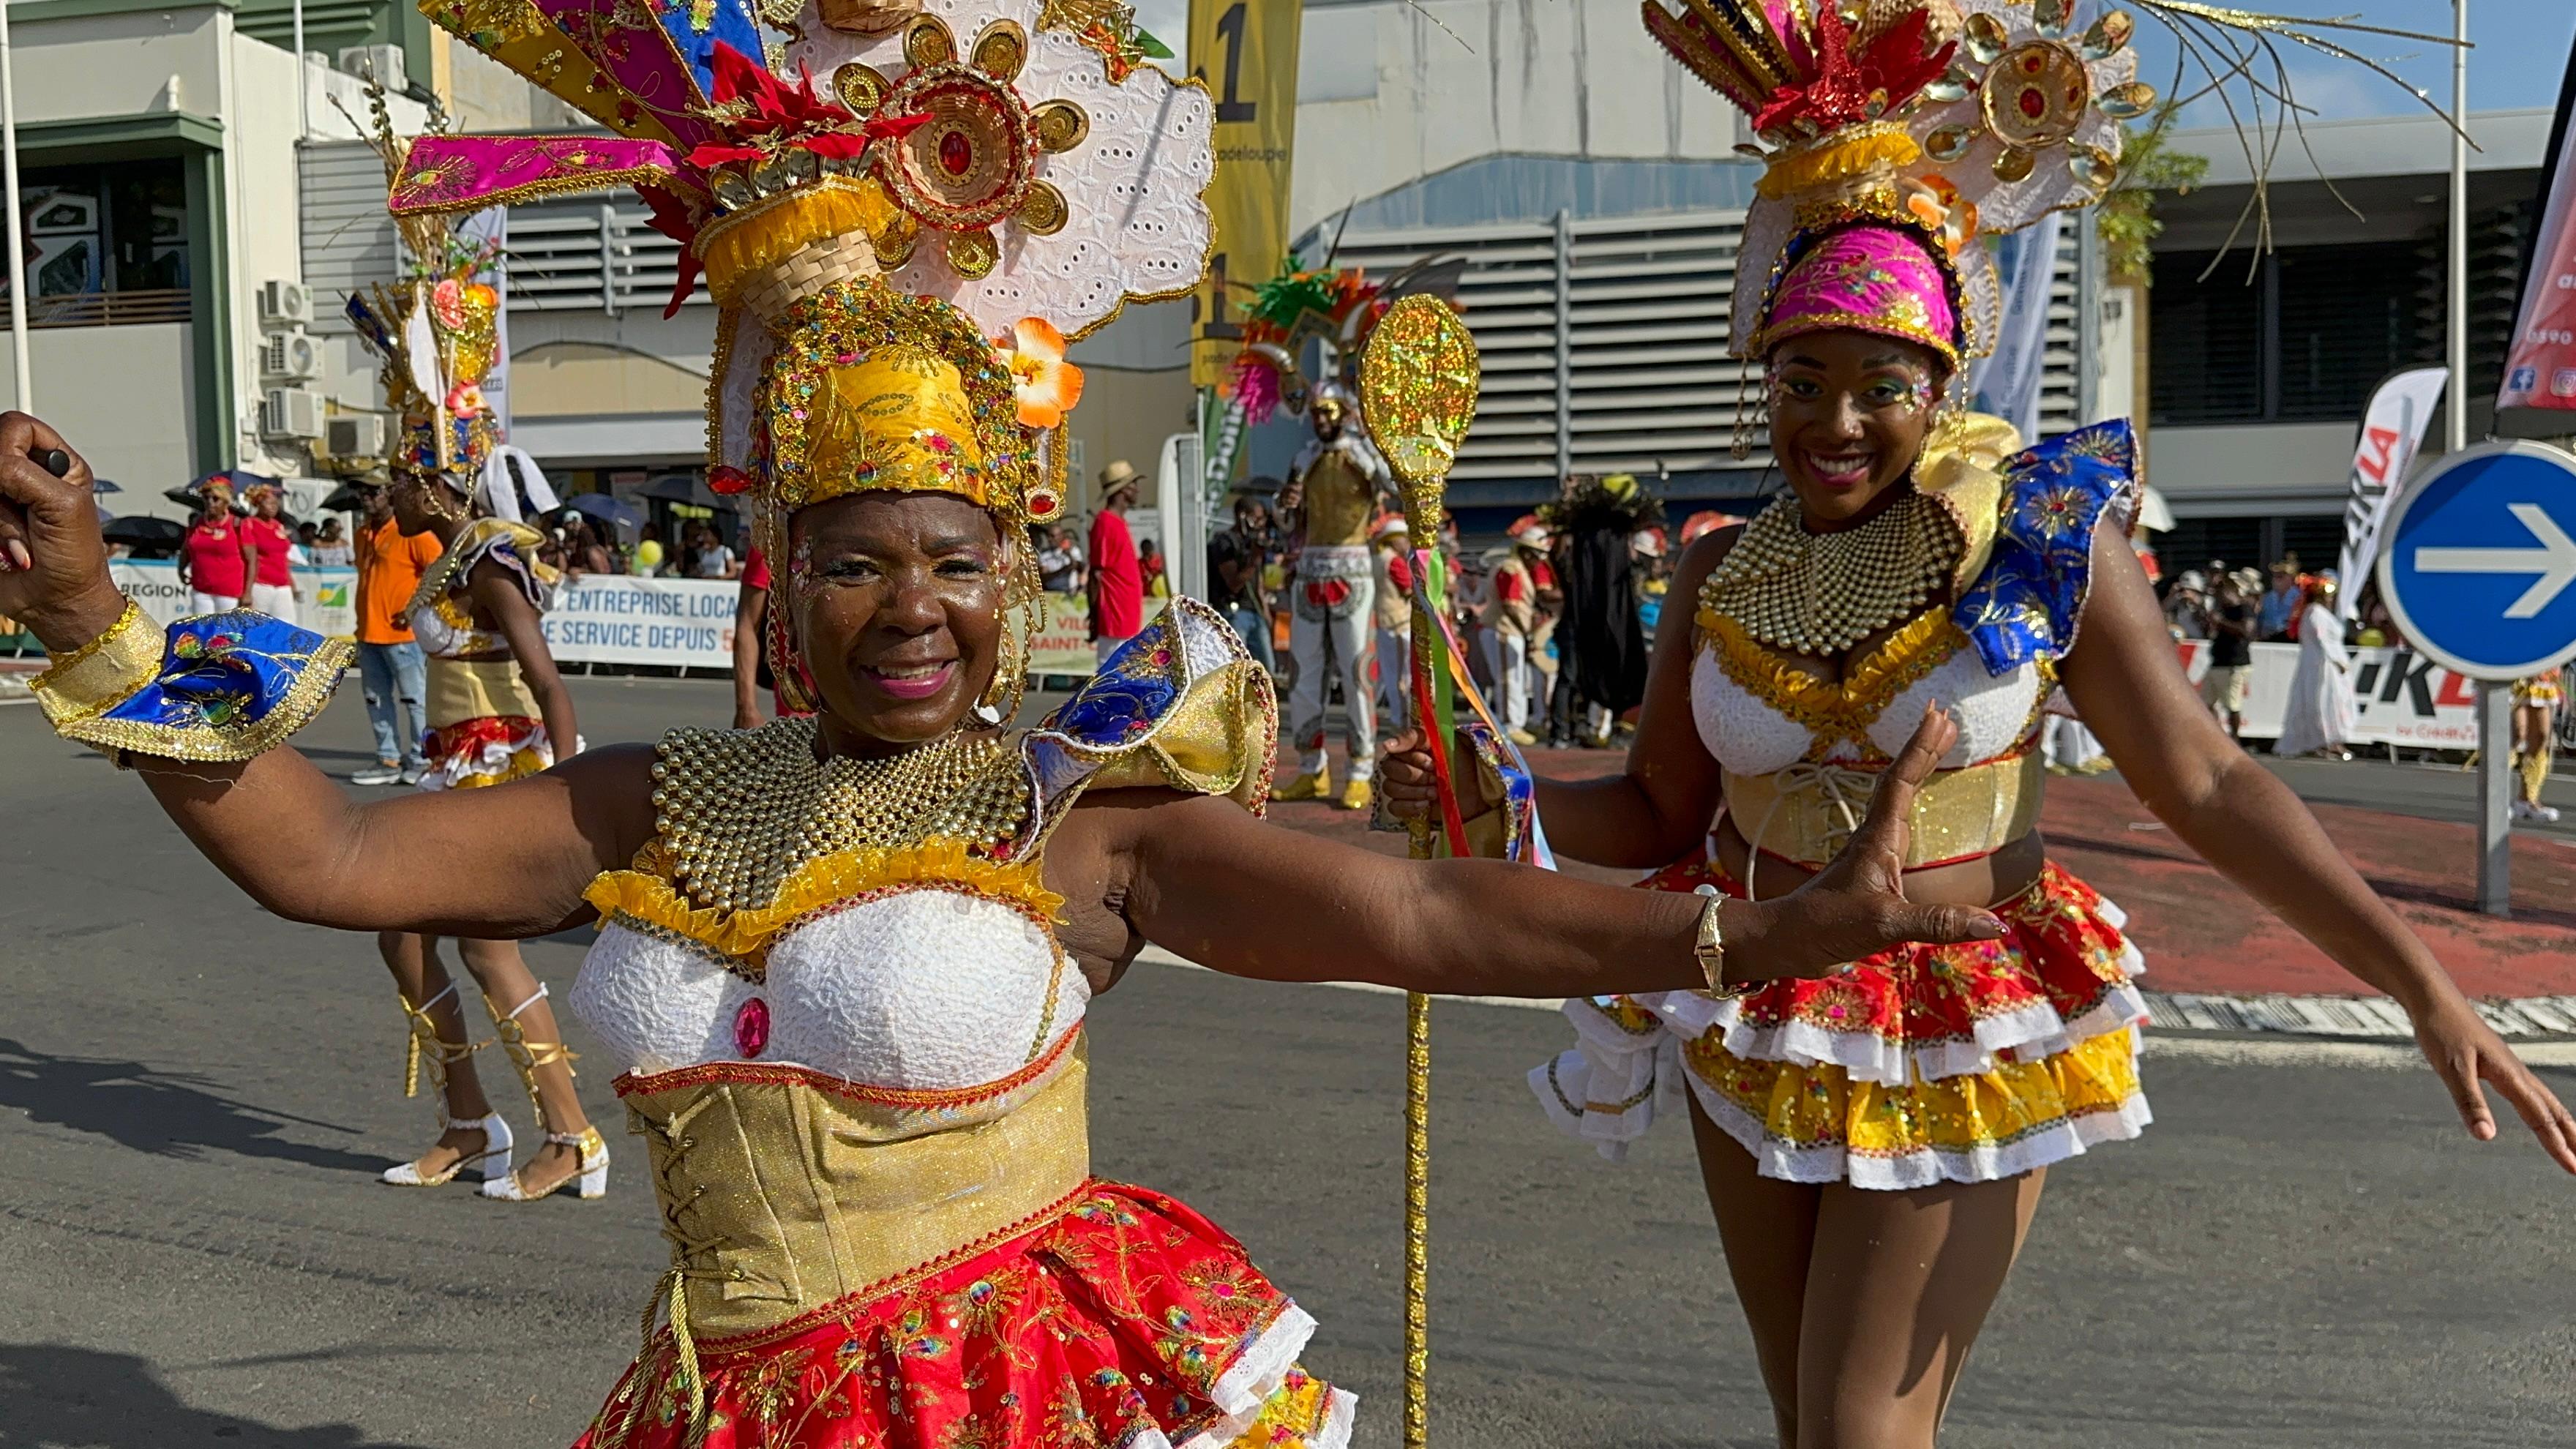     Revivez la Giga parade maestro du Mardi Gras à Basse-Terre

